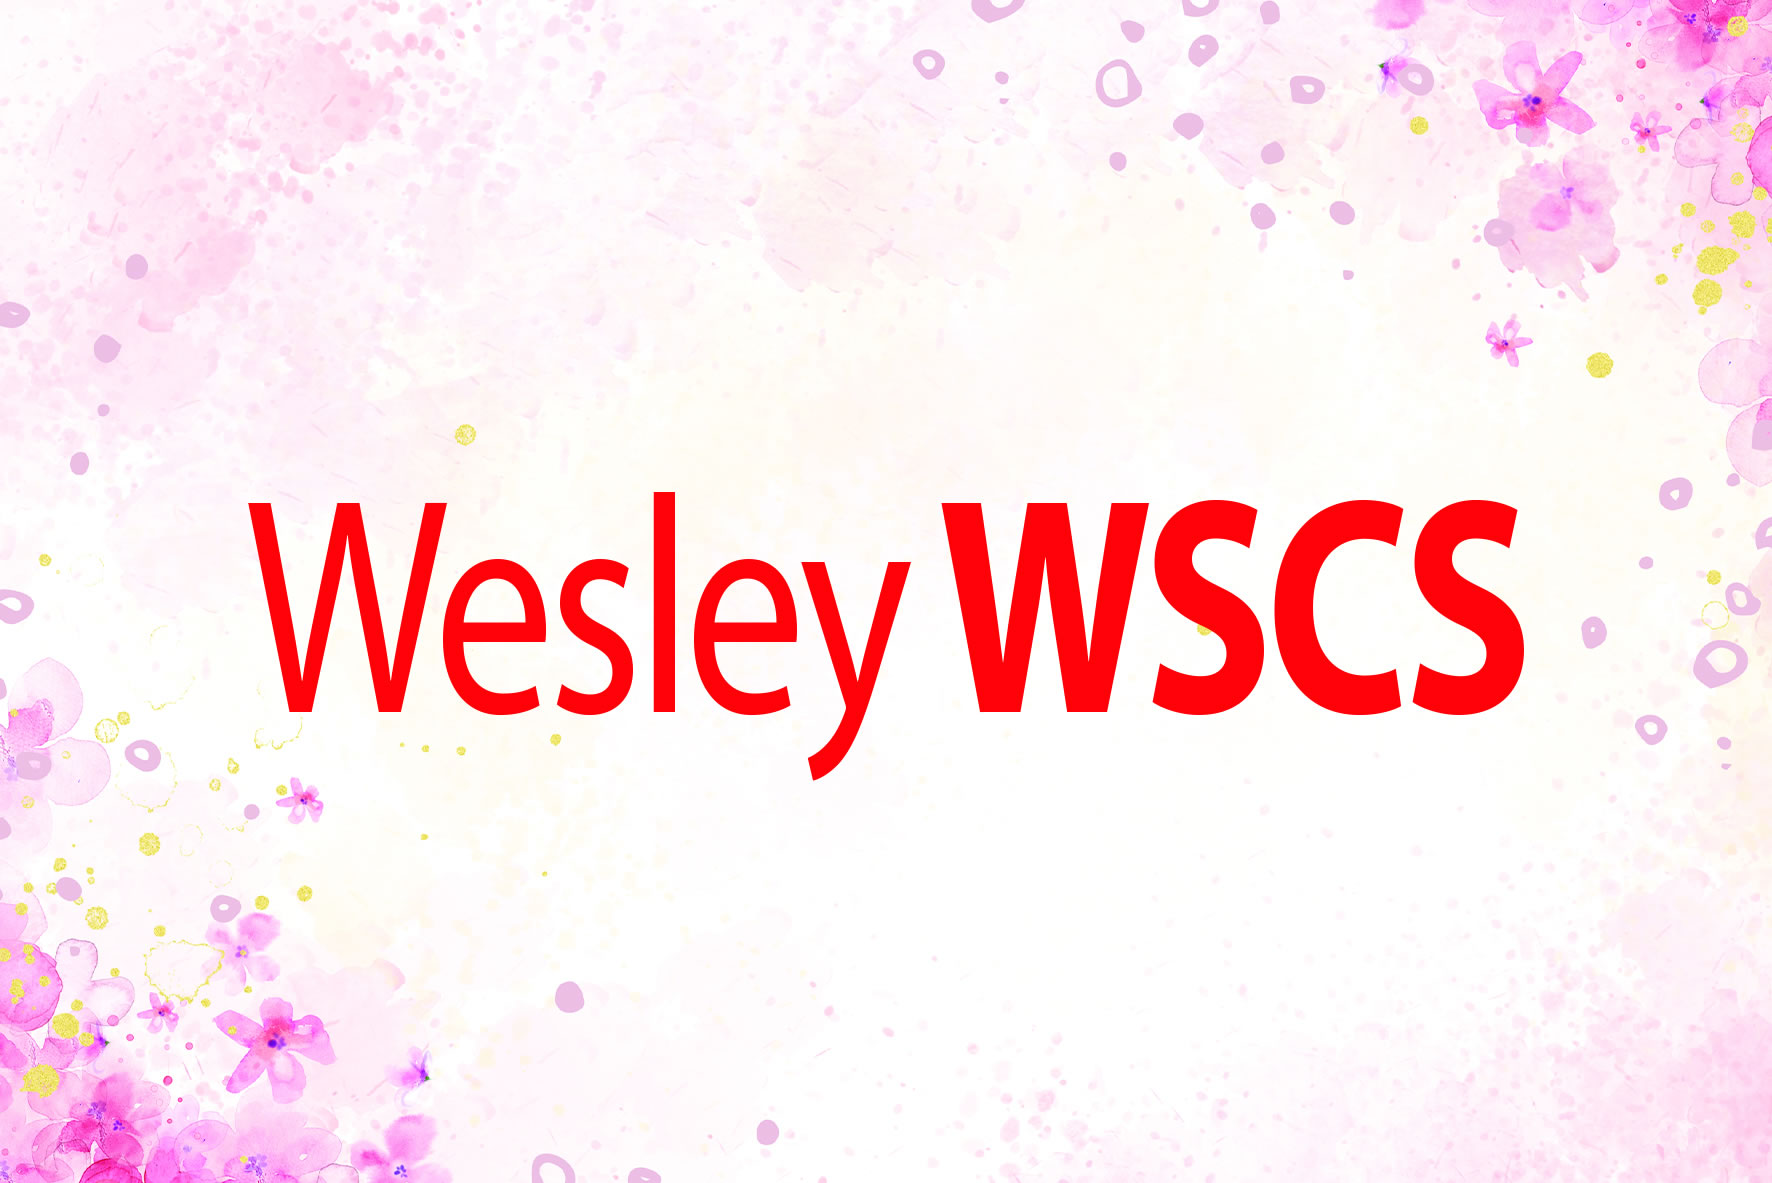 WWSCS - Ministry Programmes